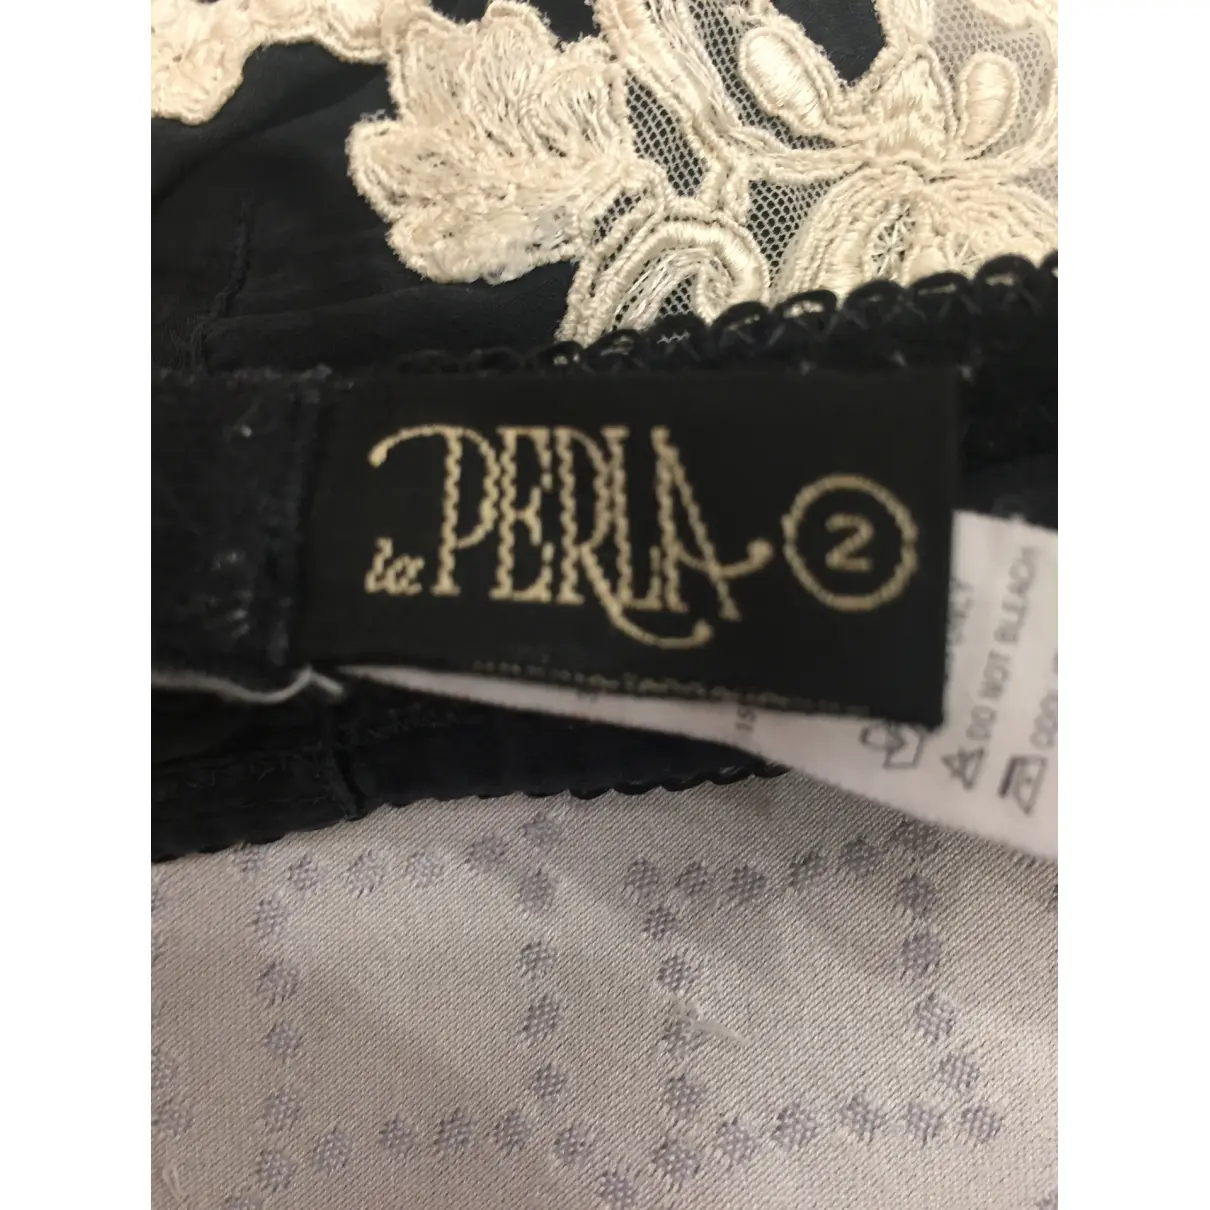 Buy La Perla Silk bra online